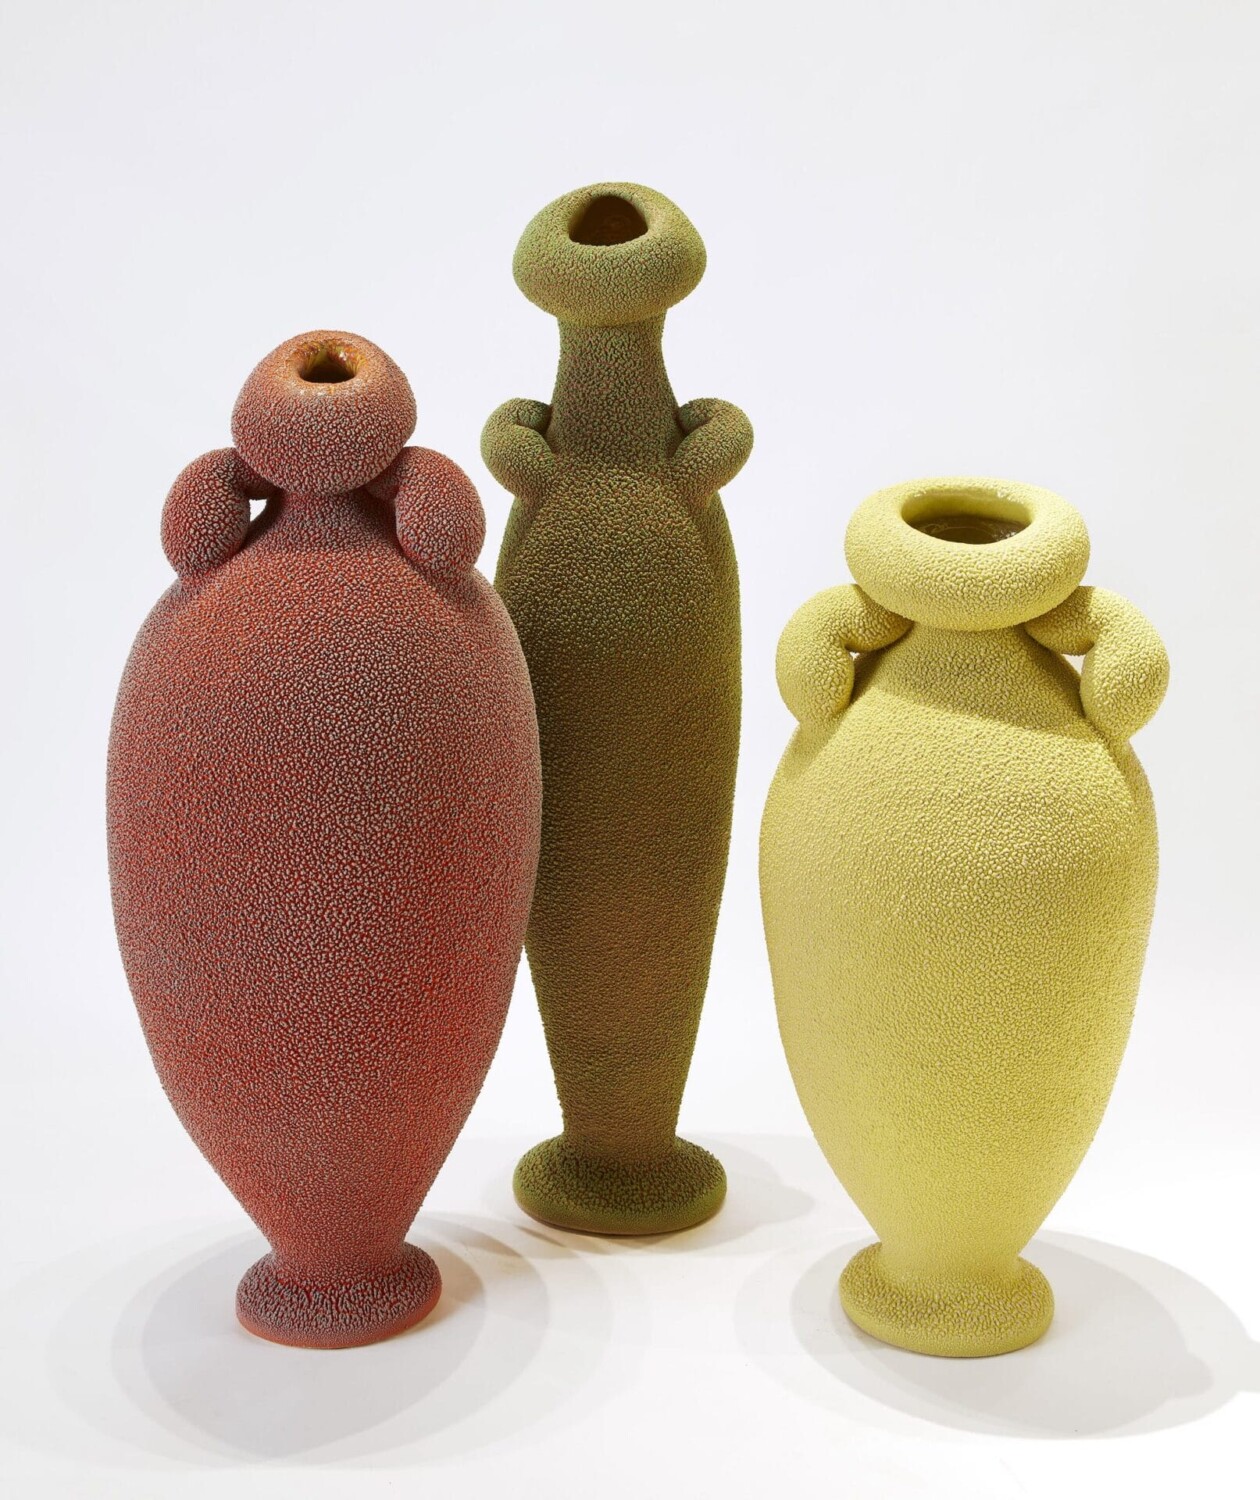 Glowing Sculptural Ceramic Vessels By Maxwell Mustardo (11)